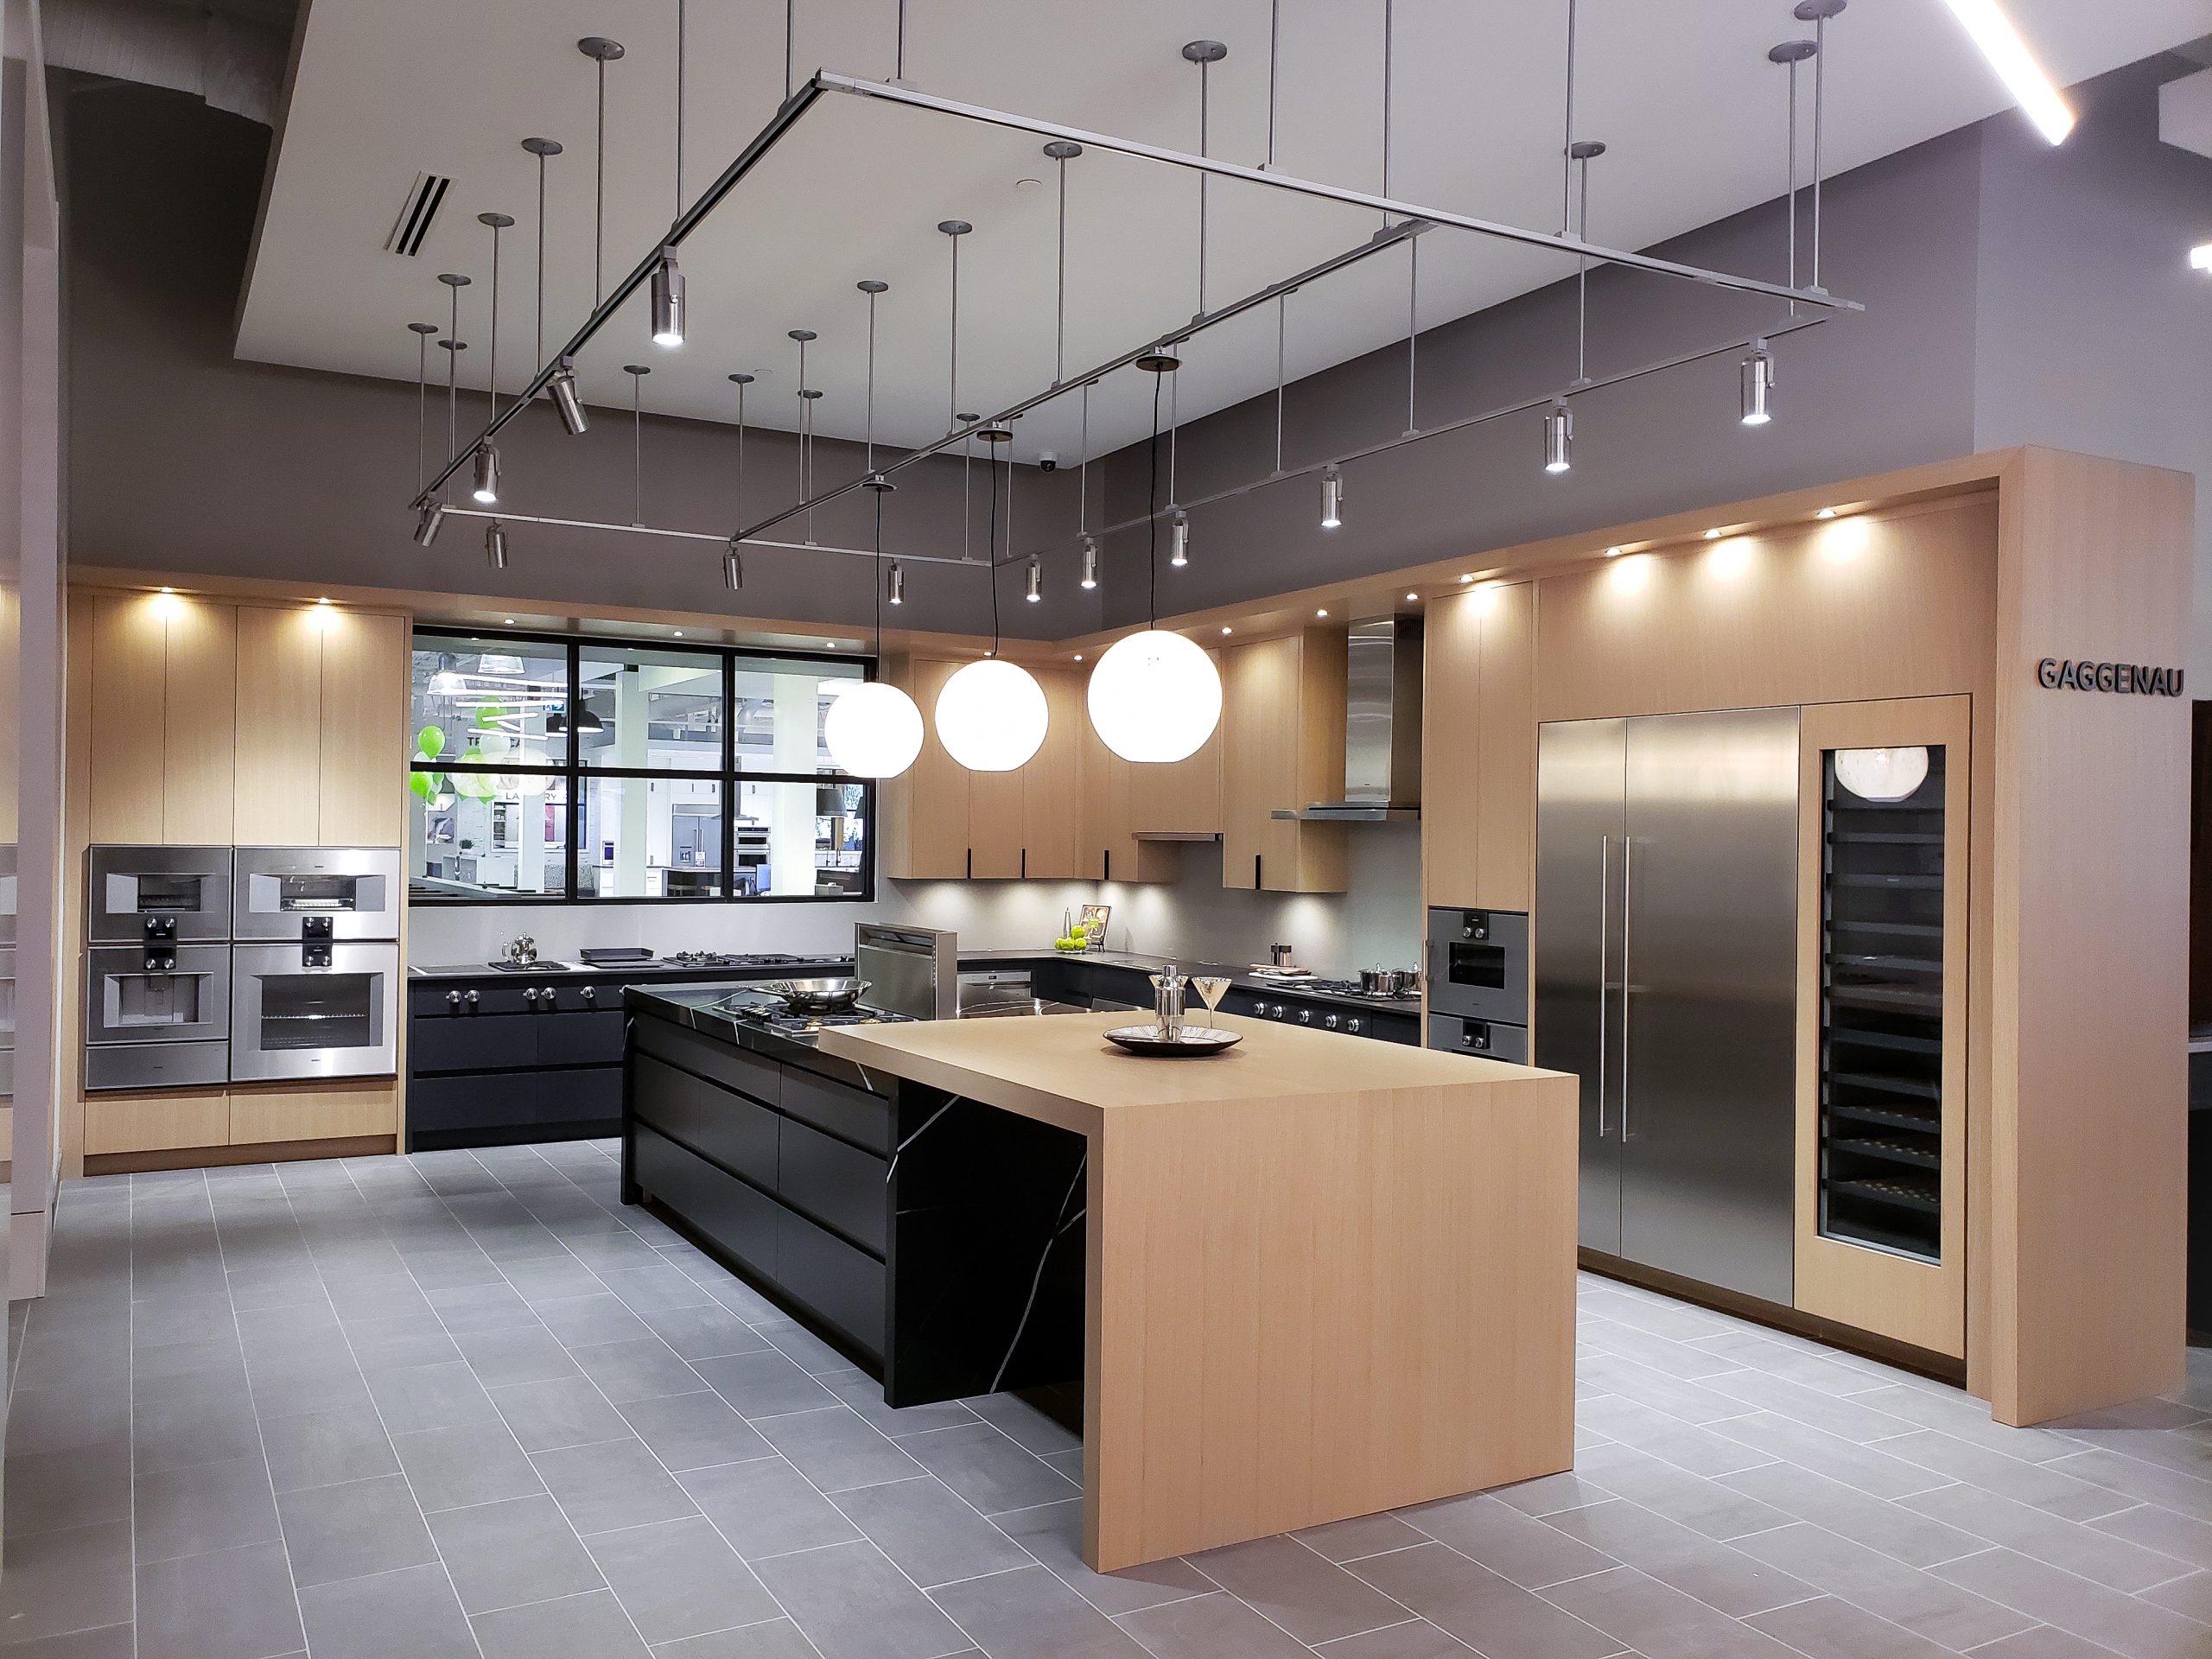 art architecture and design kitchen